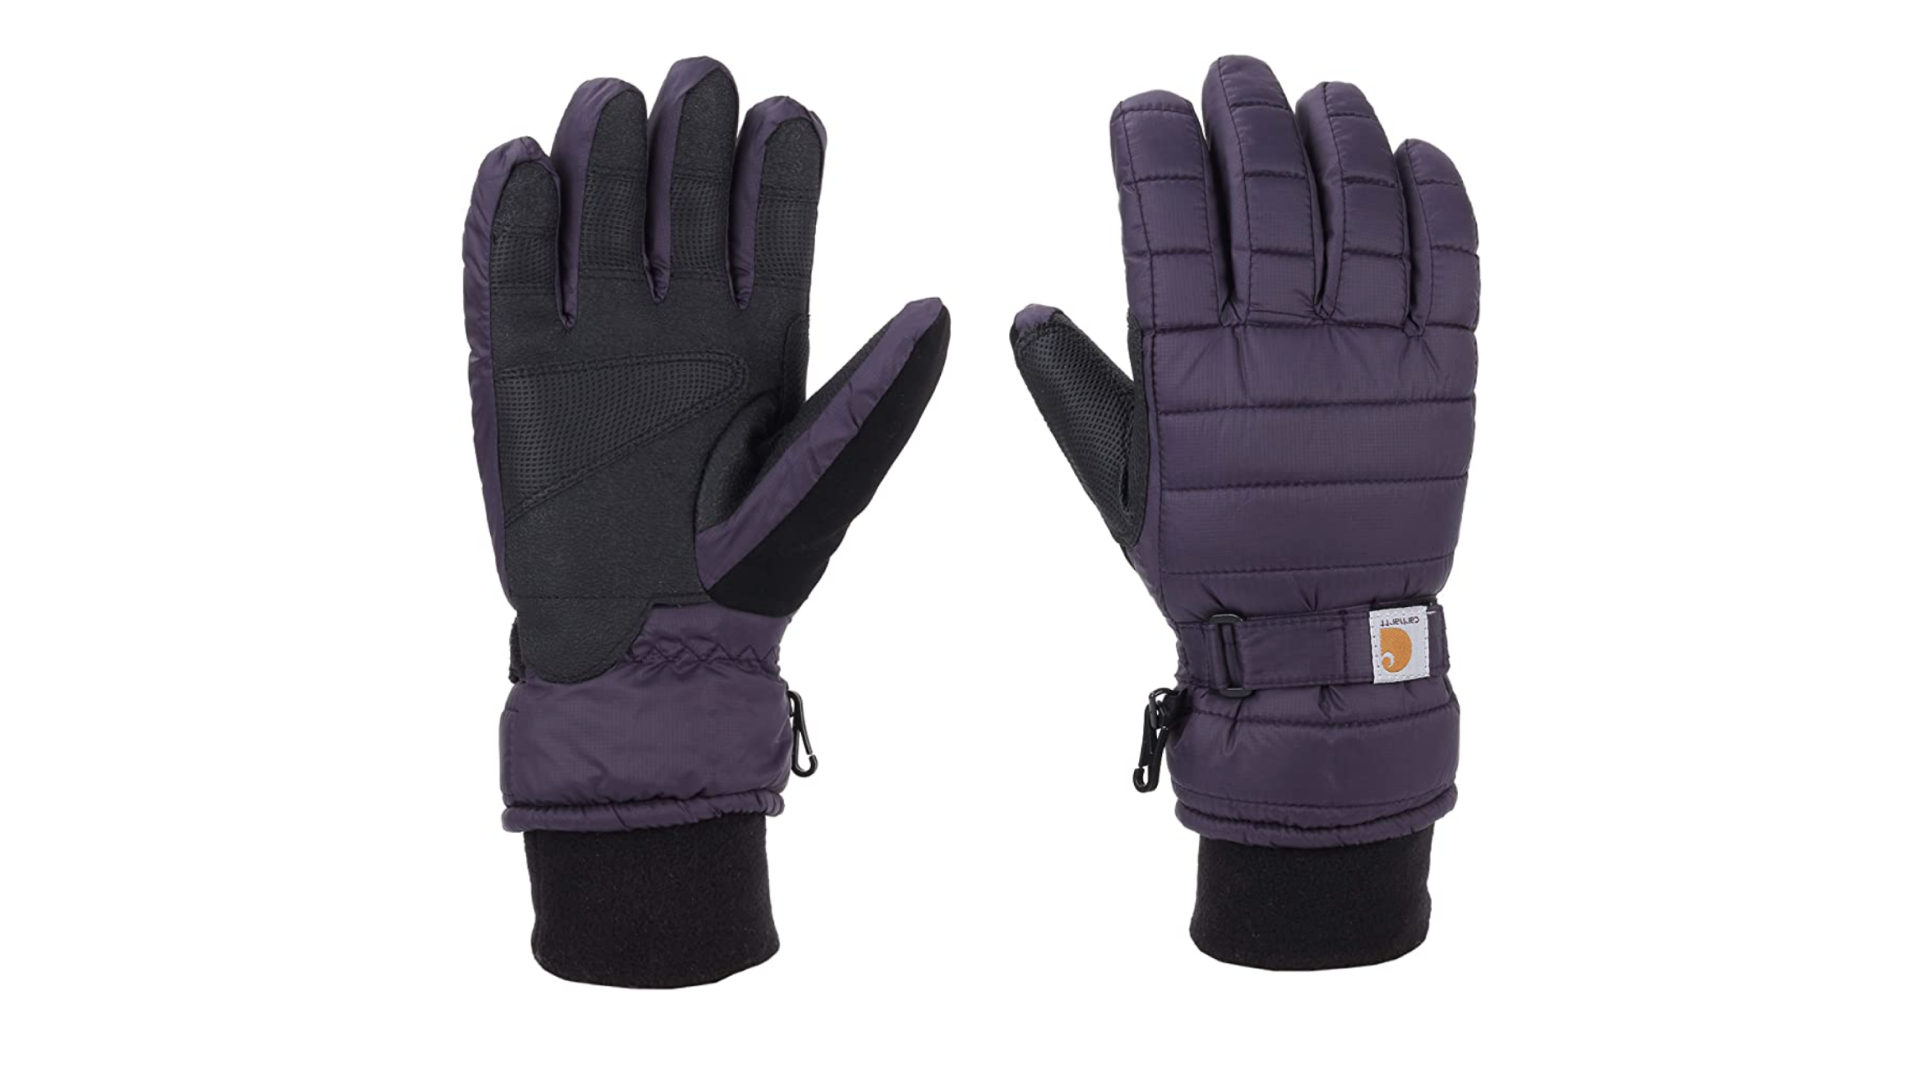 Carhartt snow gloves